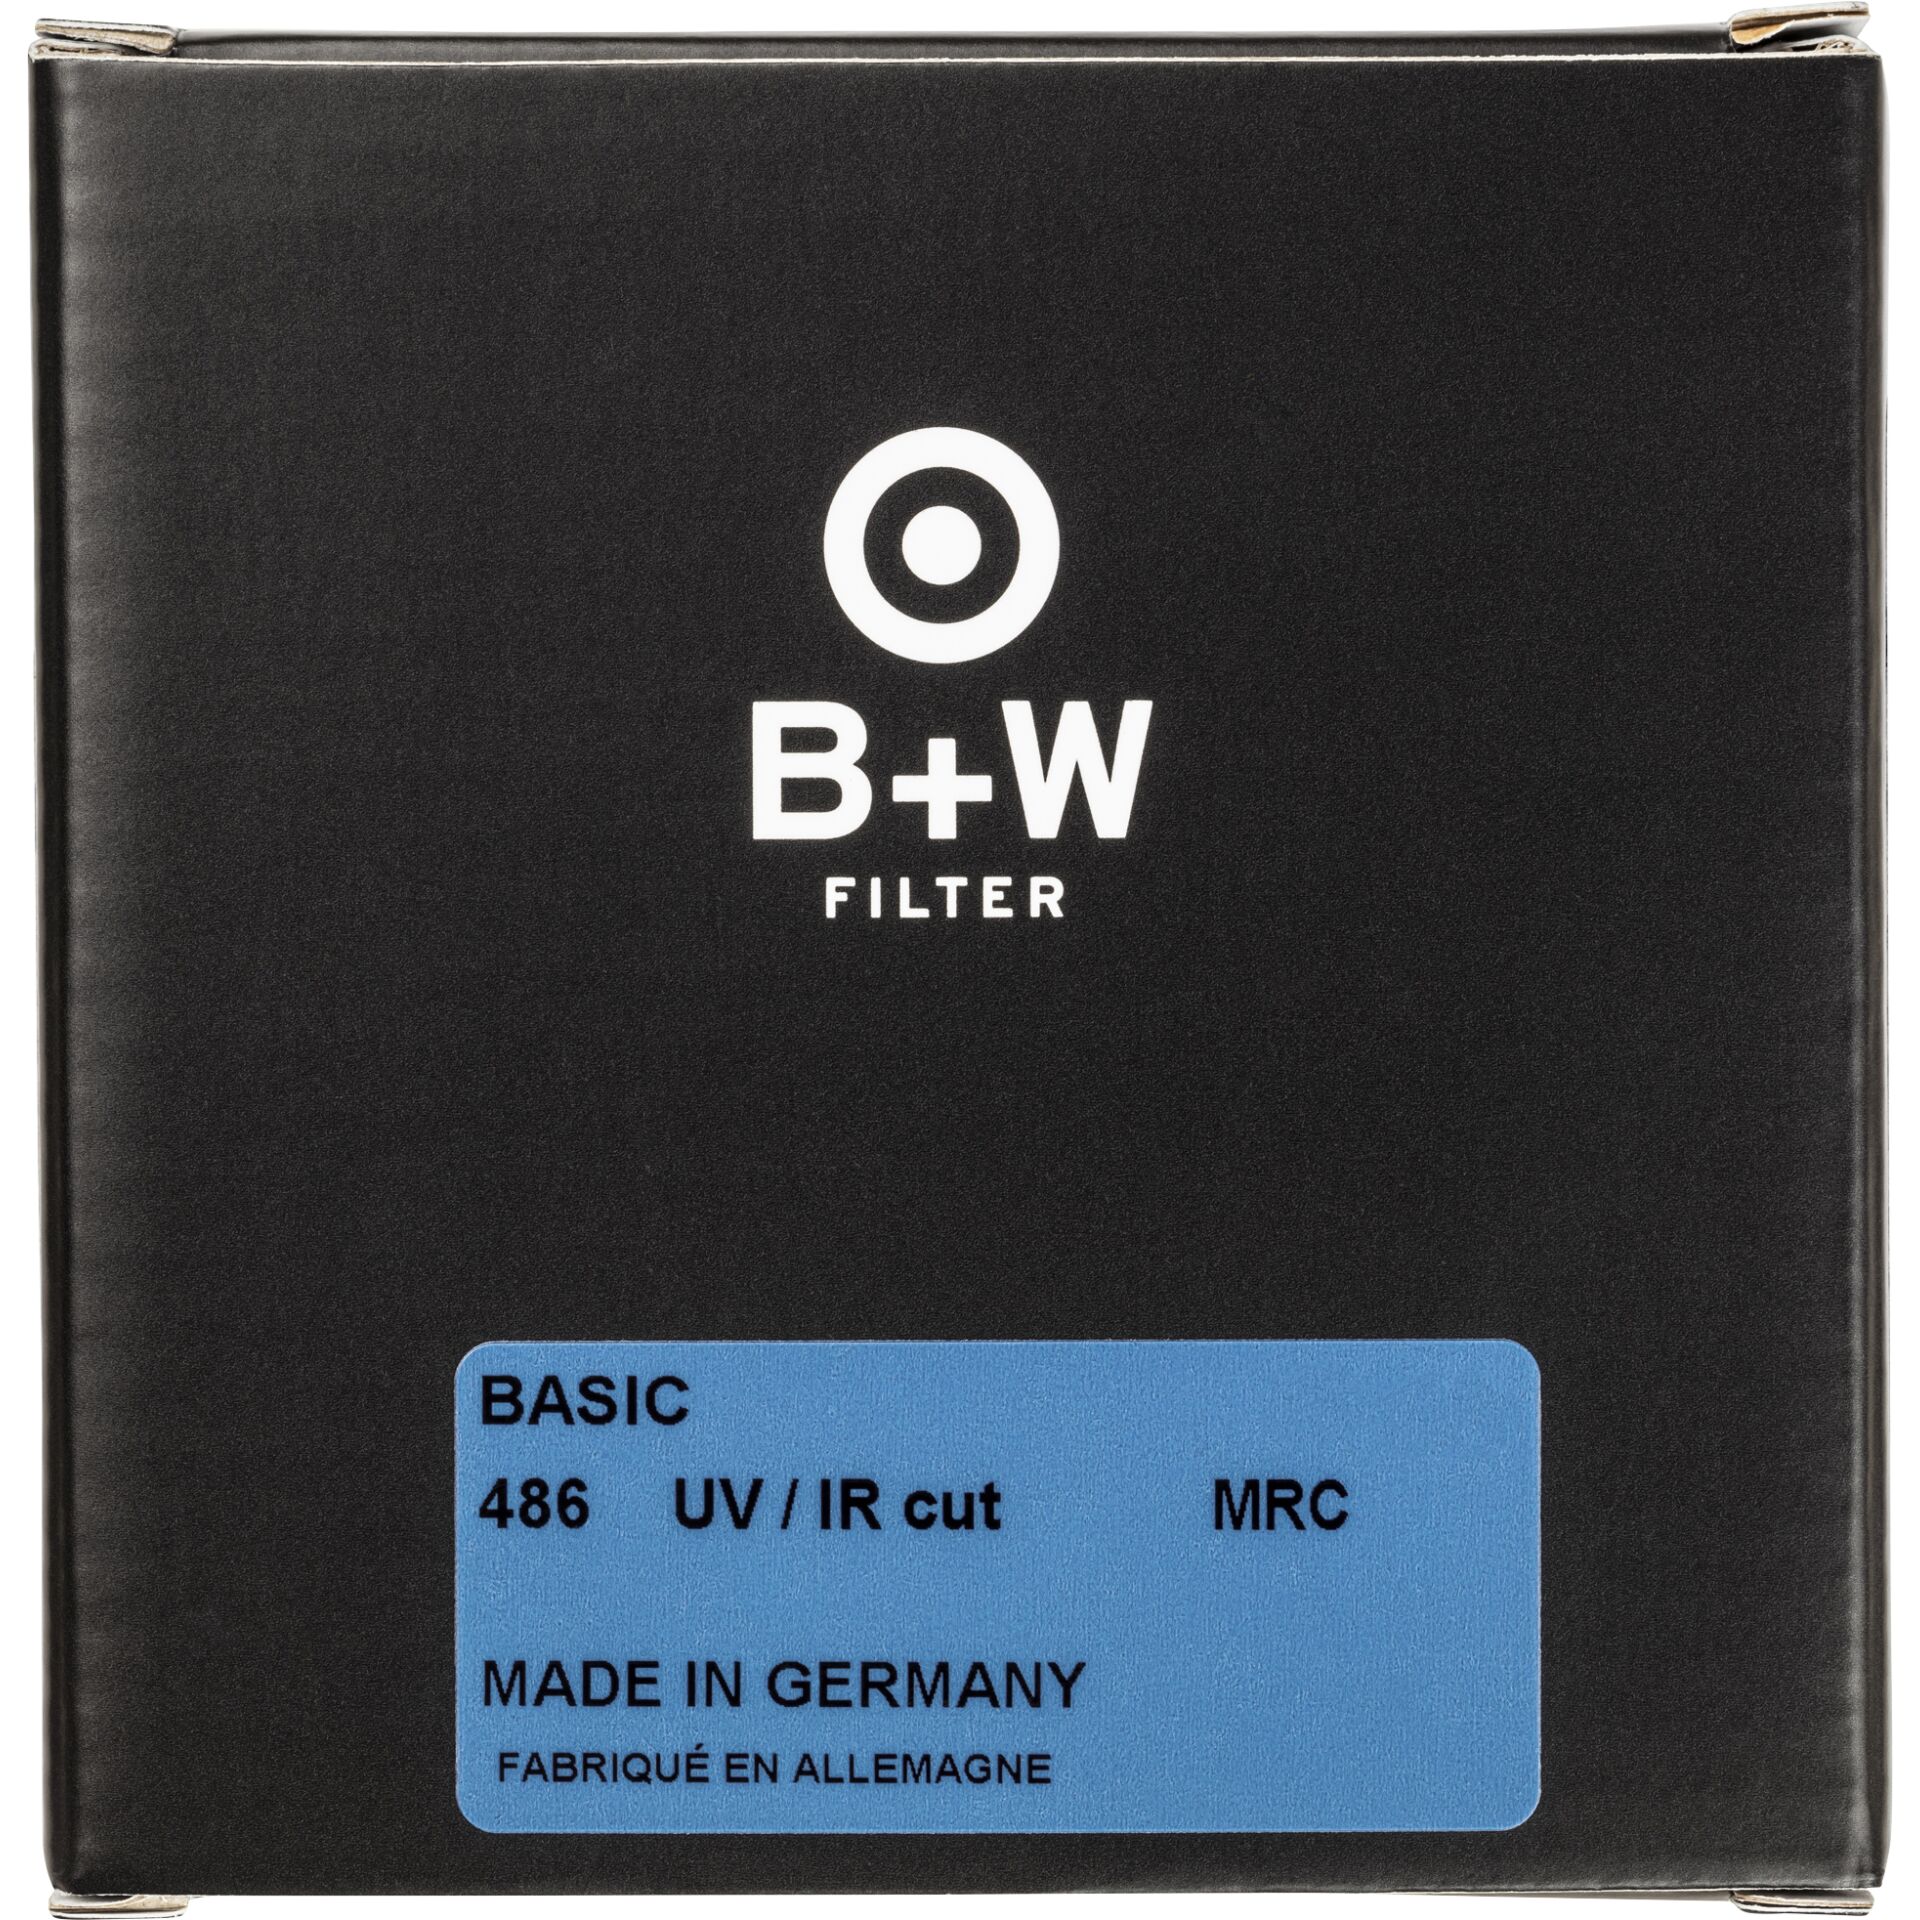 B+W UV-IR CUT 486 MRC BASIC 67mm